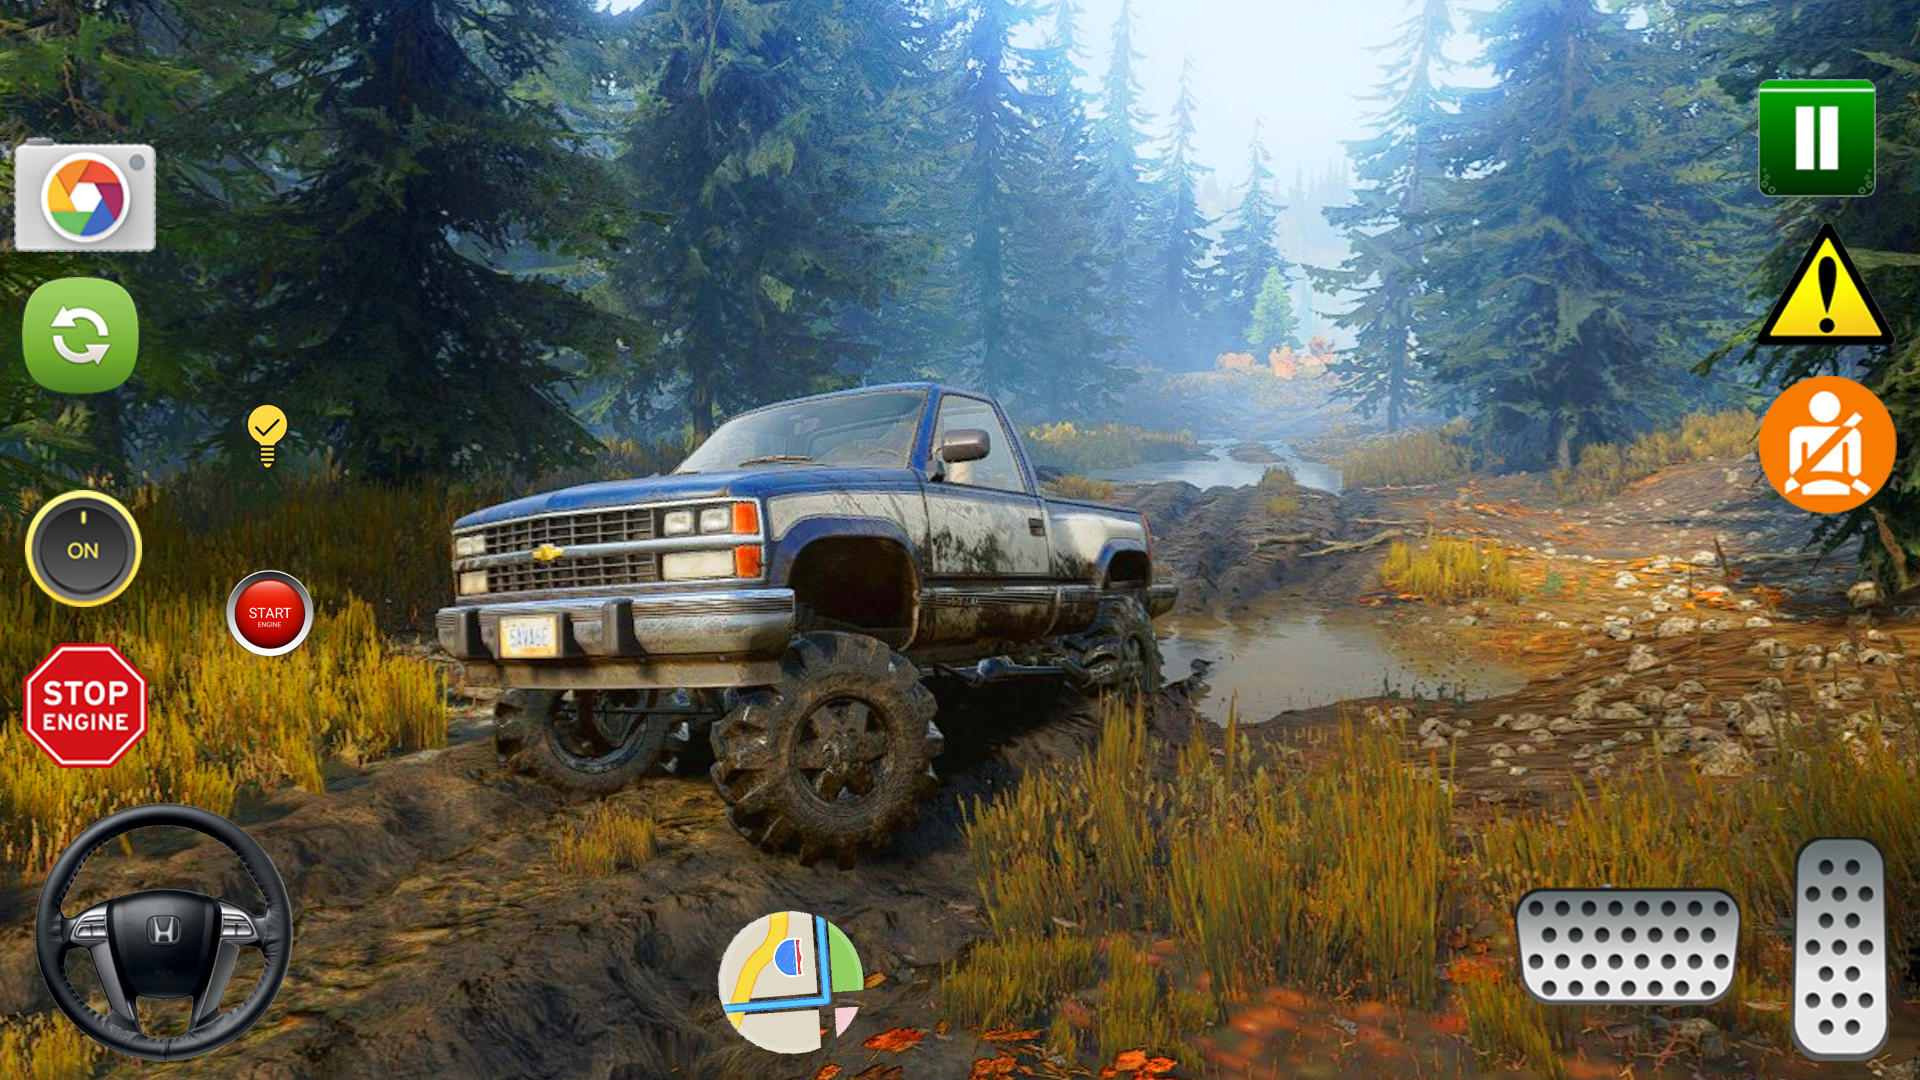 Screenshot 1 of เกมส์รถจี๊ปโคลนขับรถออฟโรด 0.1